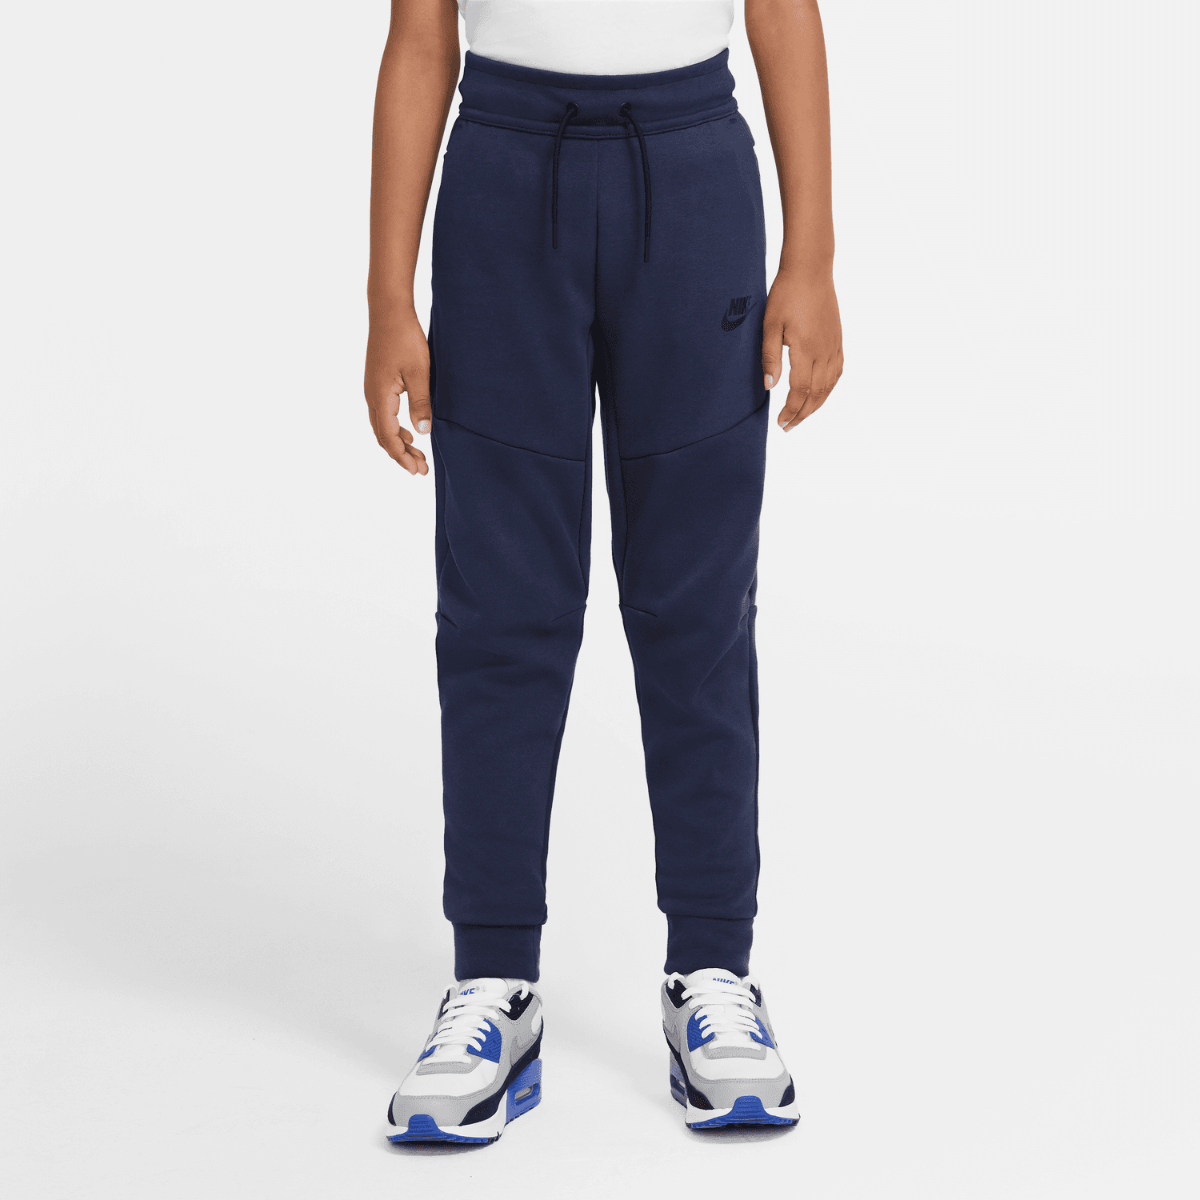 Pantaloni da jogging Nike Tech Fleece Junior - blu/neri